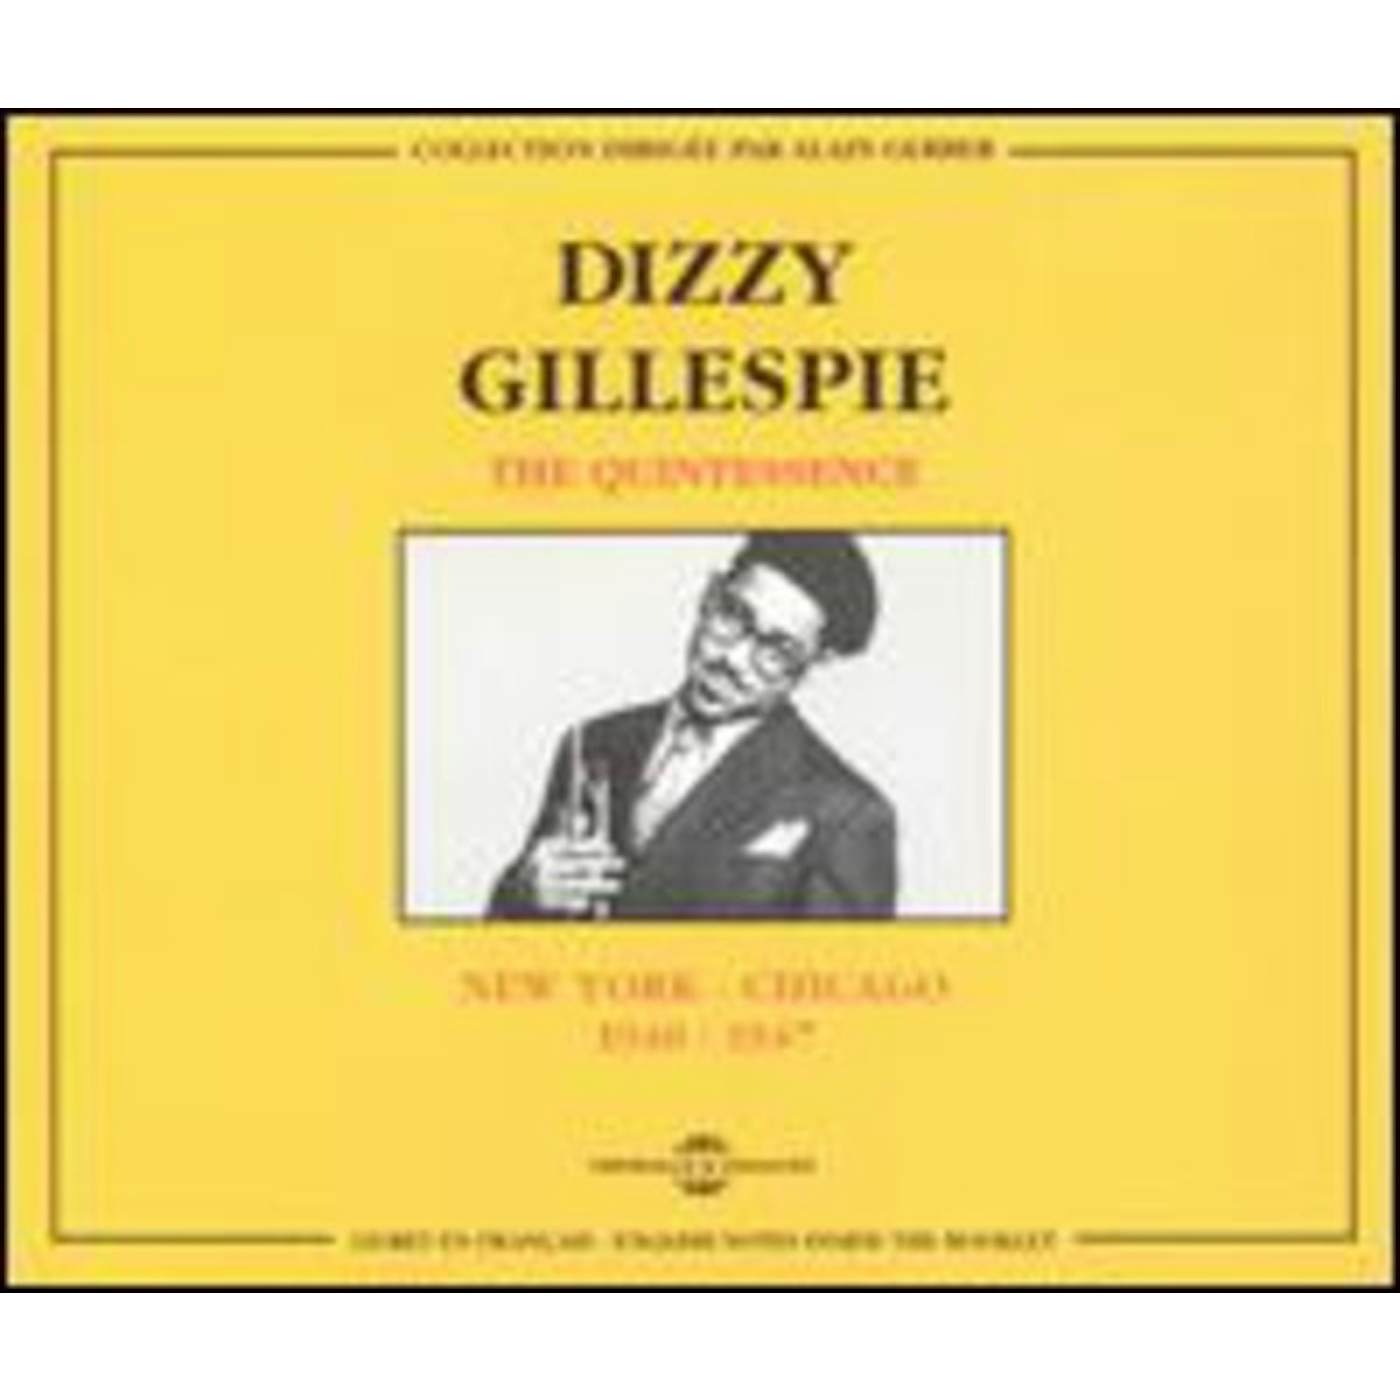 Dizzy Gillespie NEW YORK TO CHICAGO 1940-1947 CD